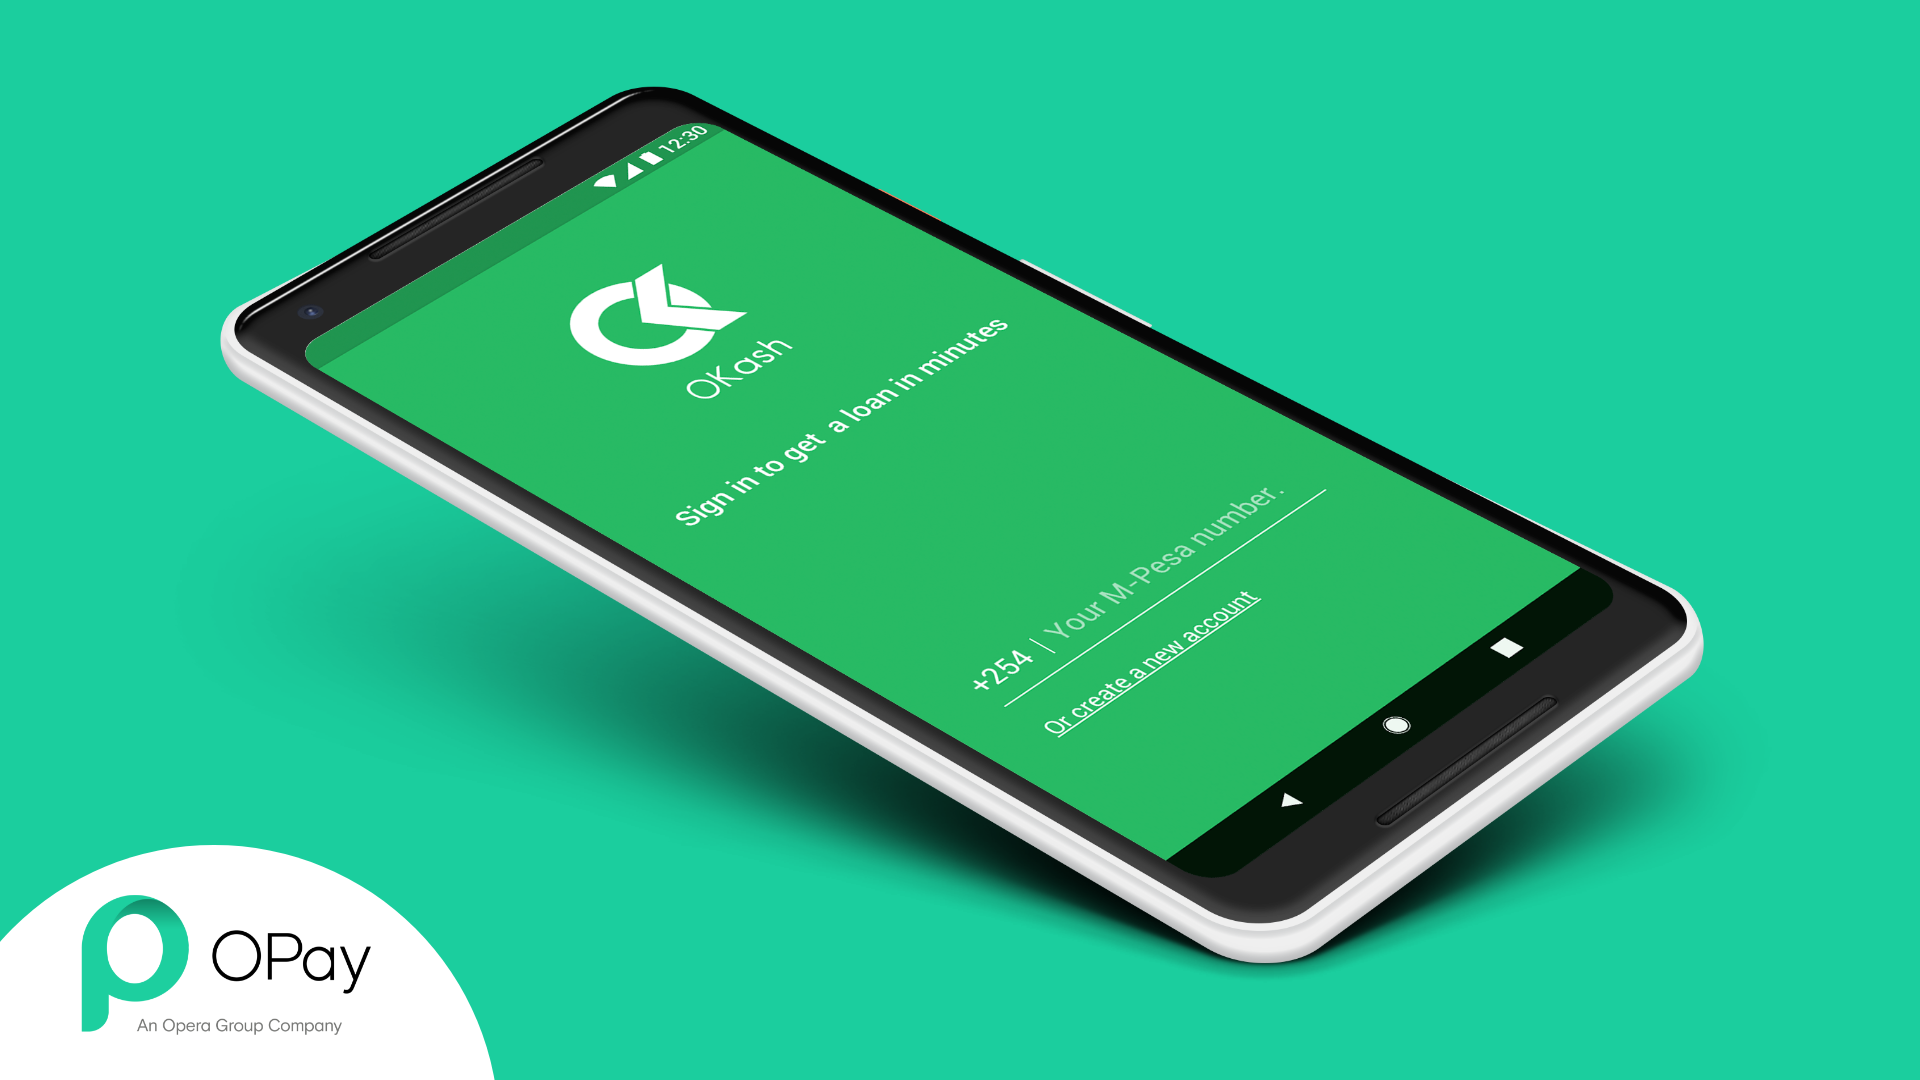 Micro Lending App “OKash” now available in Kenya